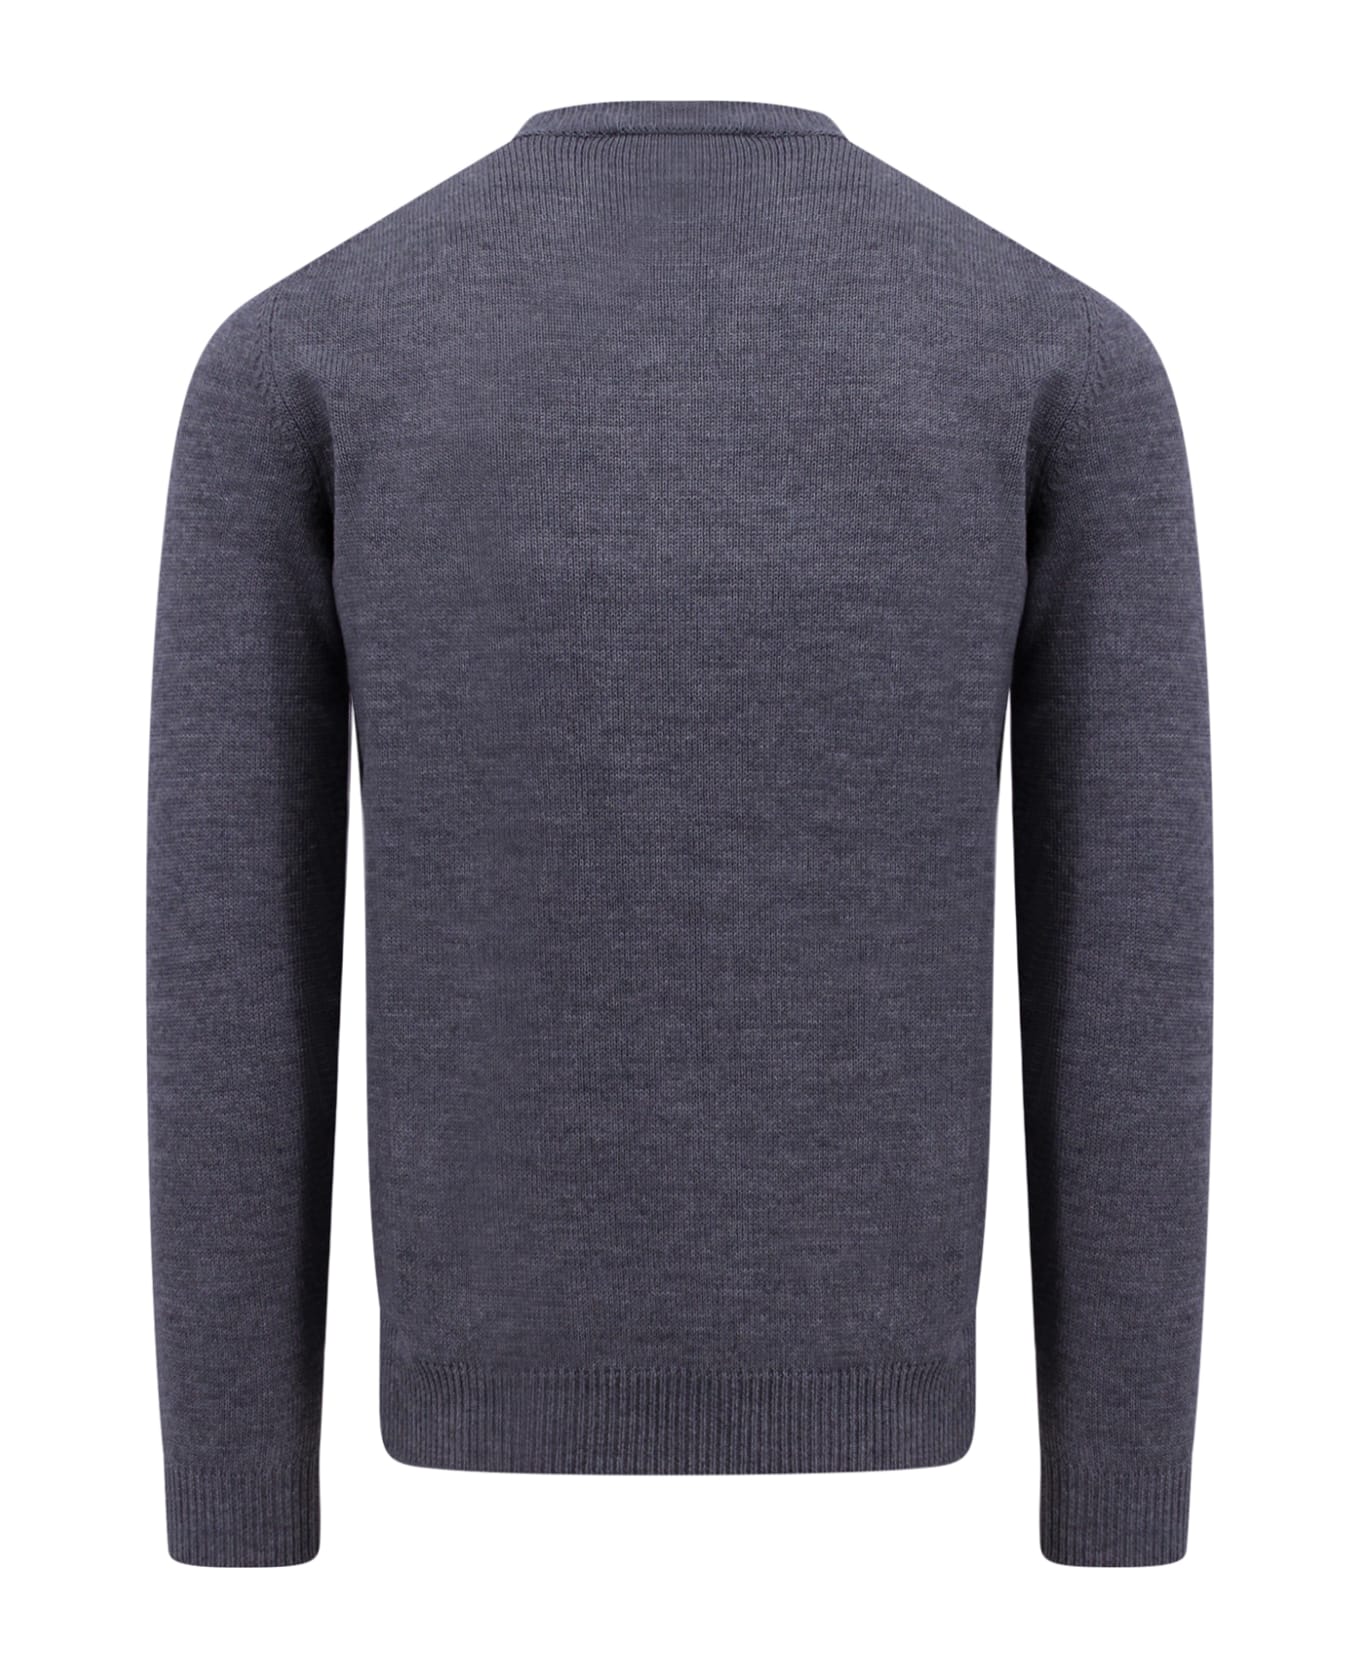 Roberto Collina Sweater - Grey ニットウェア